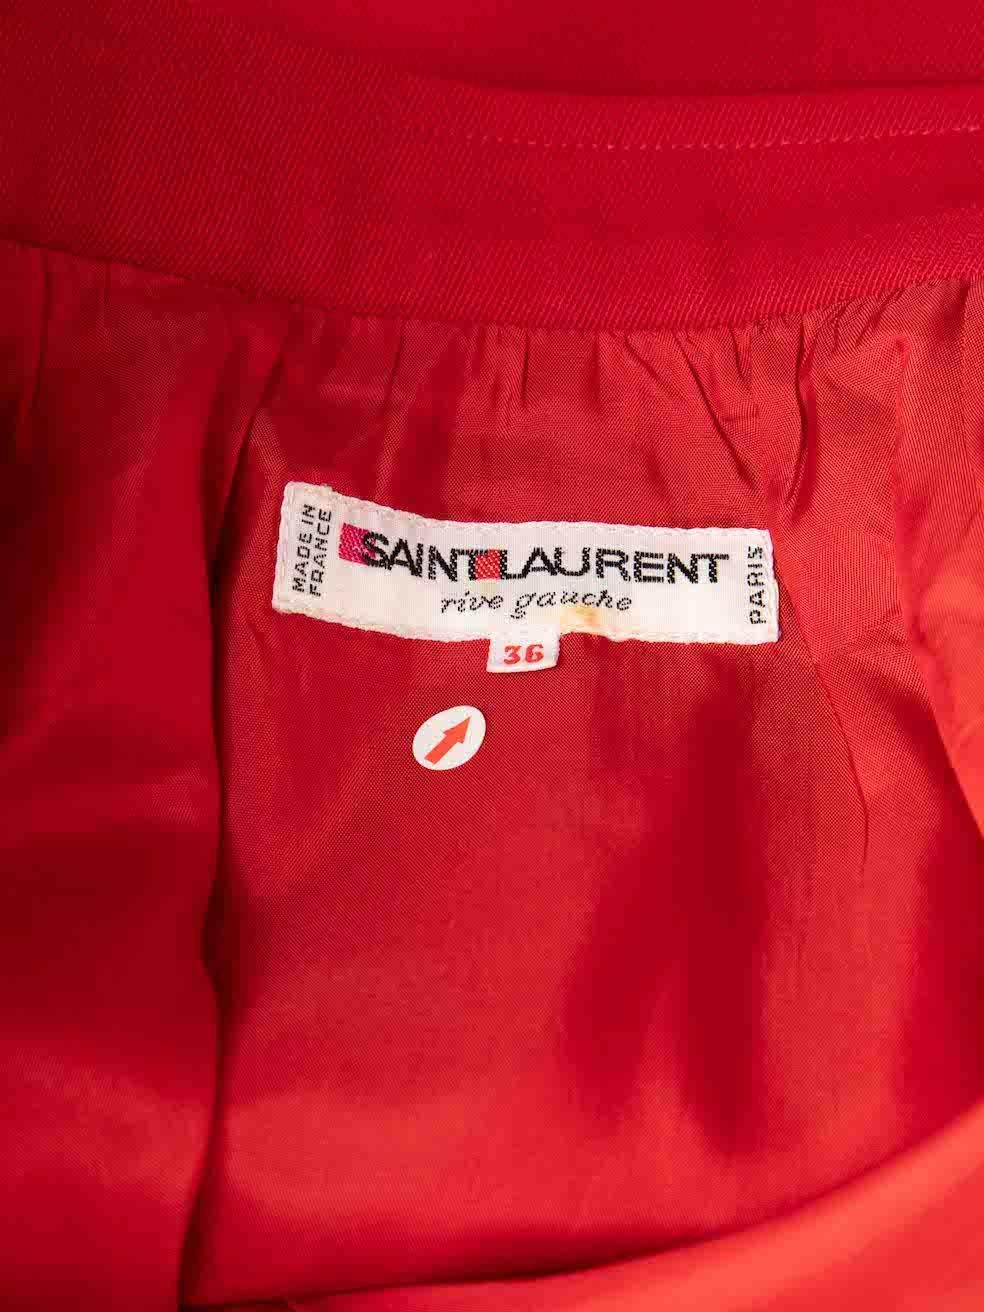 Saint Laurent Vintage Red Knee Length Pencil Skirt Size S For Sale 1